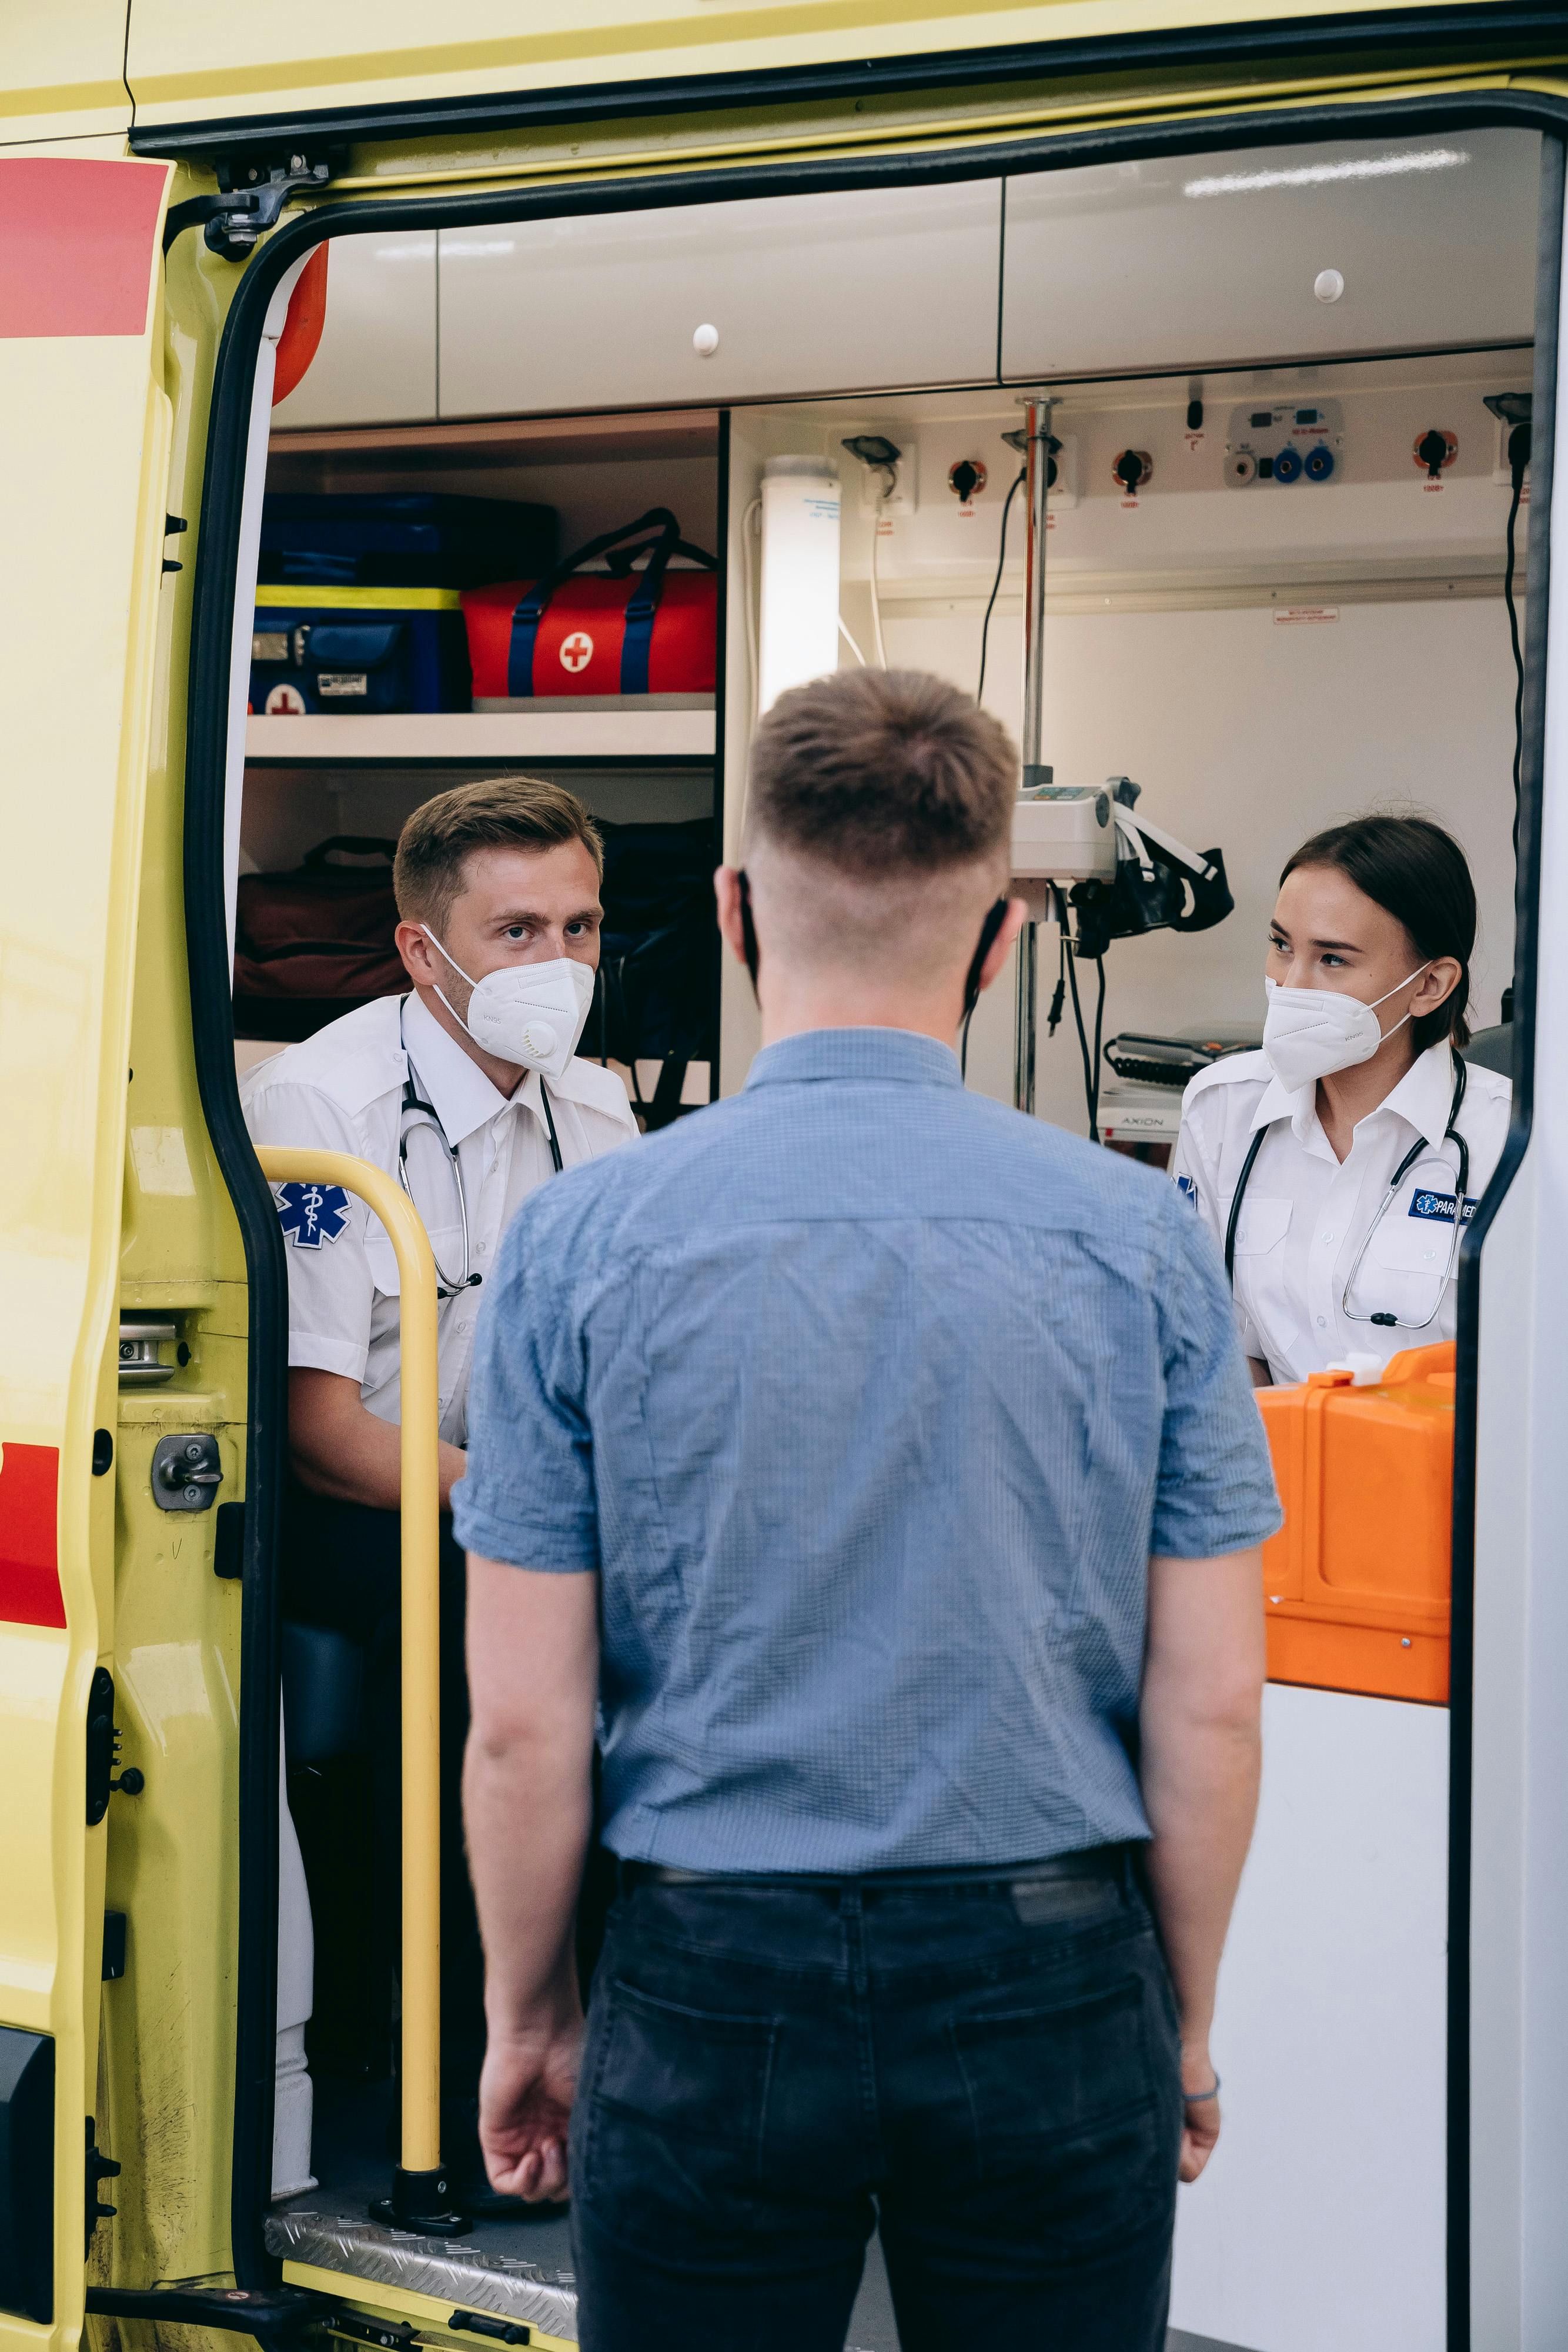 paramedics wearing face masks discussing inside an ambulance